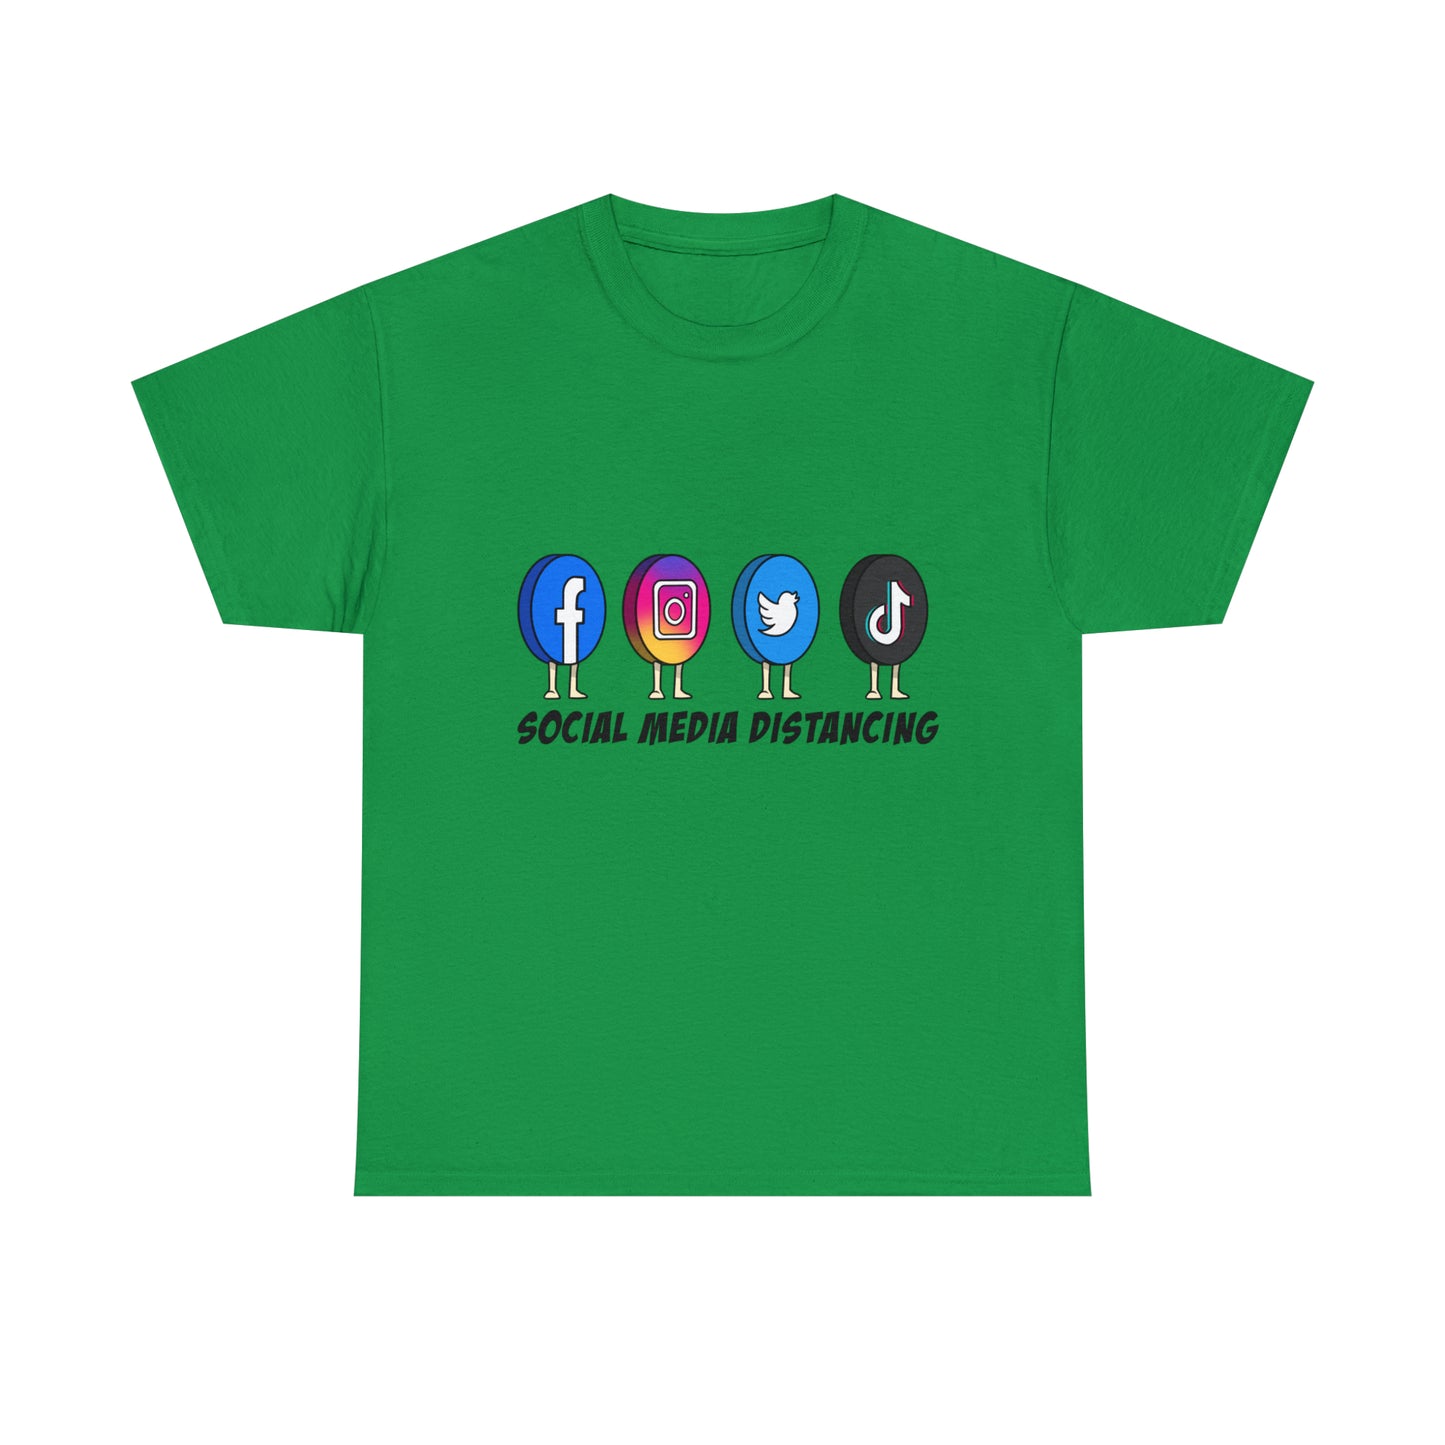 Custom Parody T-shirt, Social Media Distancing design